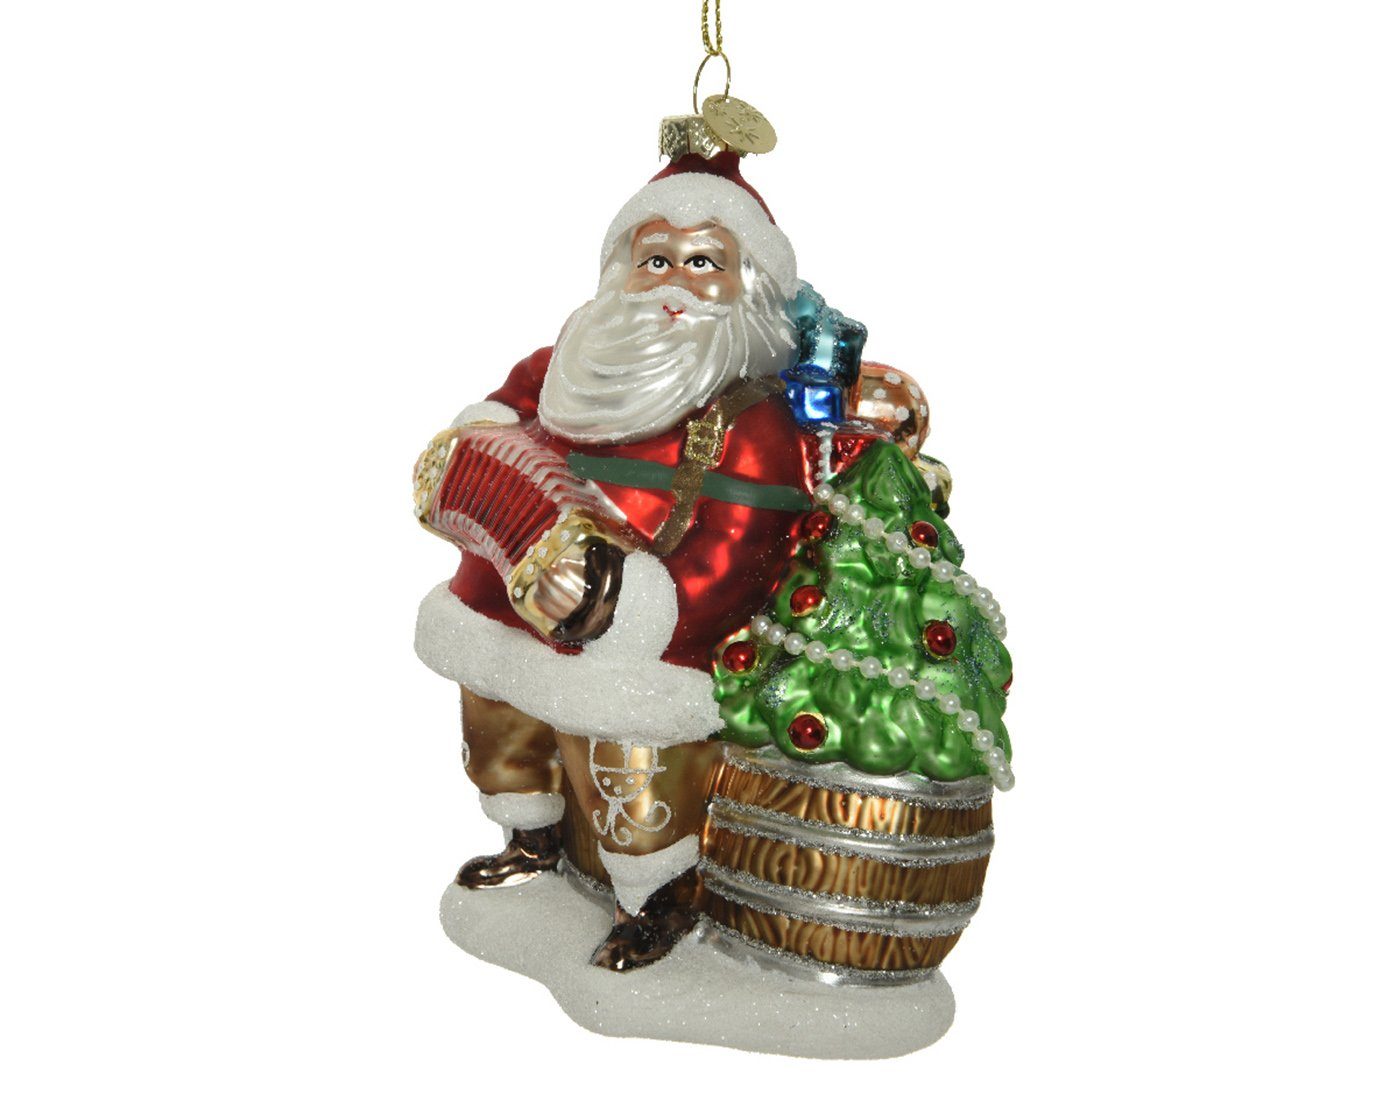 Decoris season decorations Christbaumschmuck, Christbaumschmuck Glas Weihnachtsmann mit Weihnachtsbaum 15cm rot